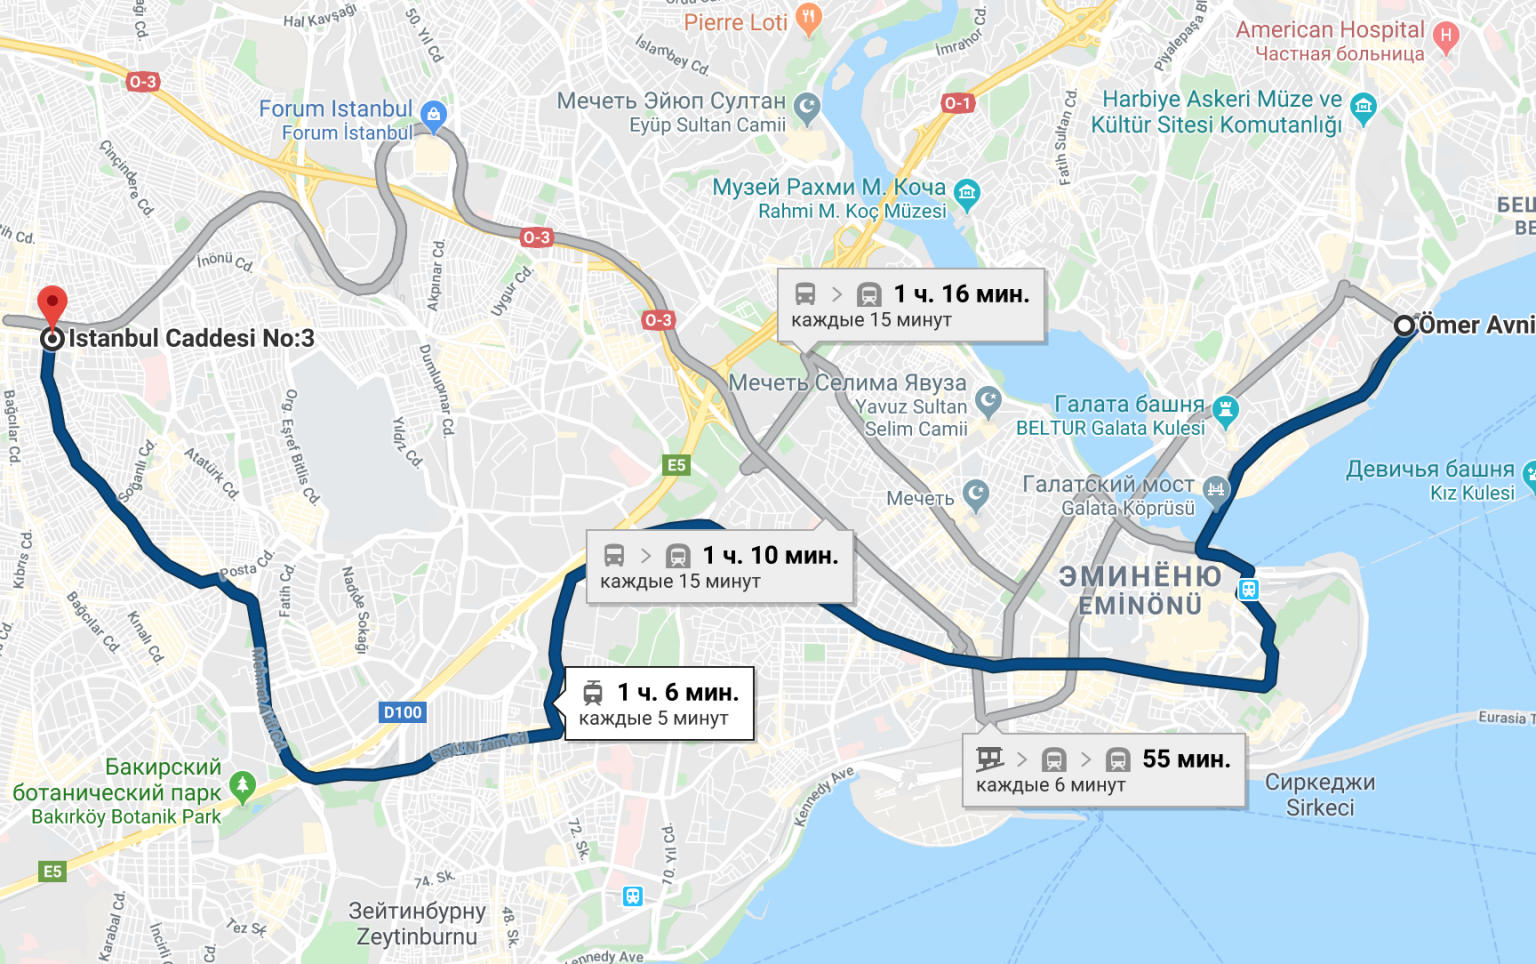 Как доехать до султанахмета. Схема трамвая т1 в Стамбуле. Схема трамвая 1 в Стамбуле. Трамвай т1 Стамбул схема маршрута. Трамвай т1 в Стамбуле маршрут на карте.